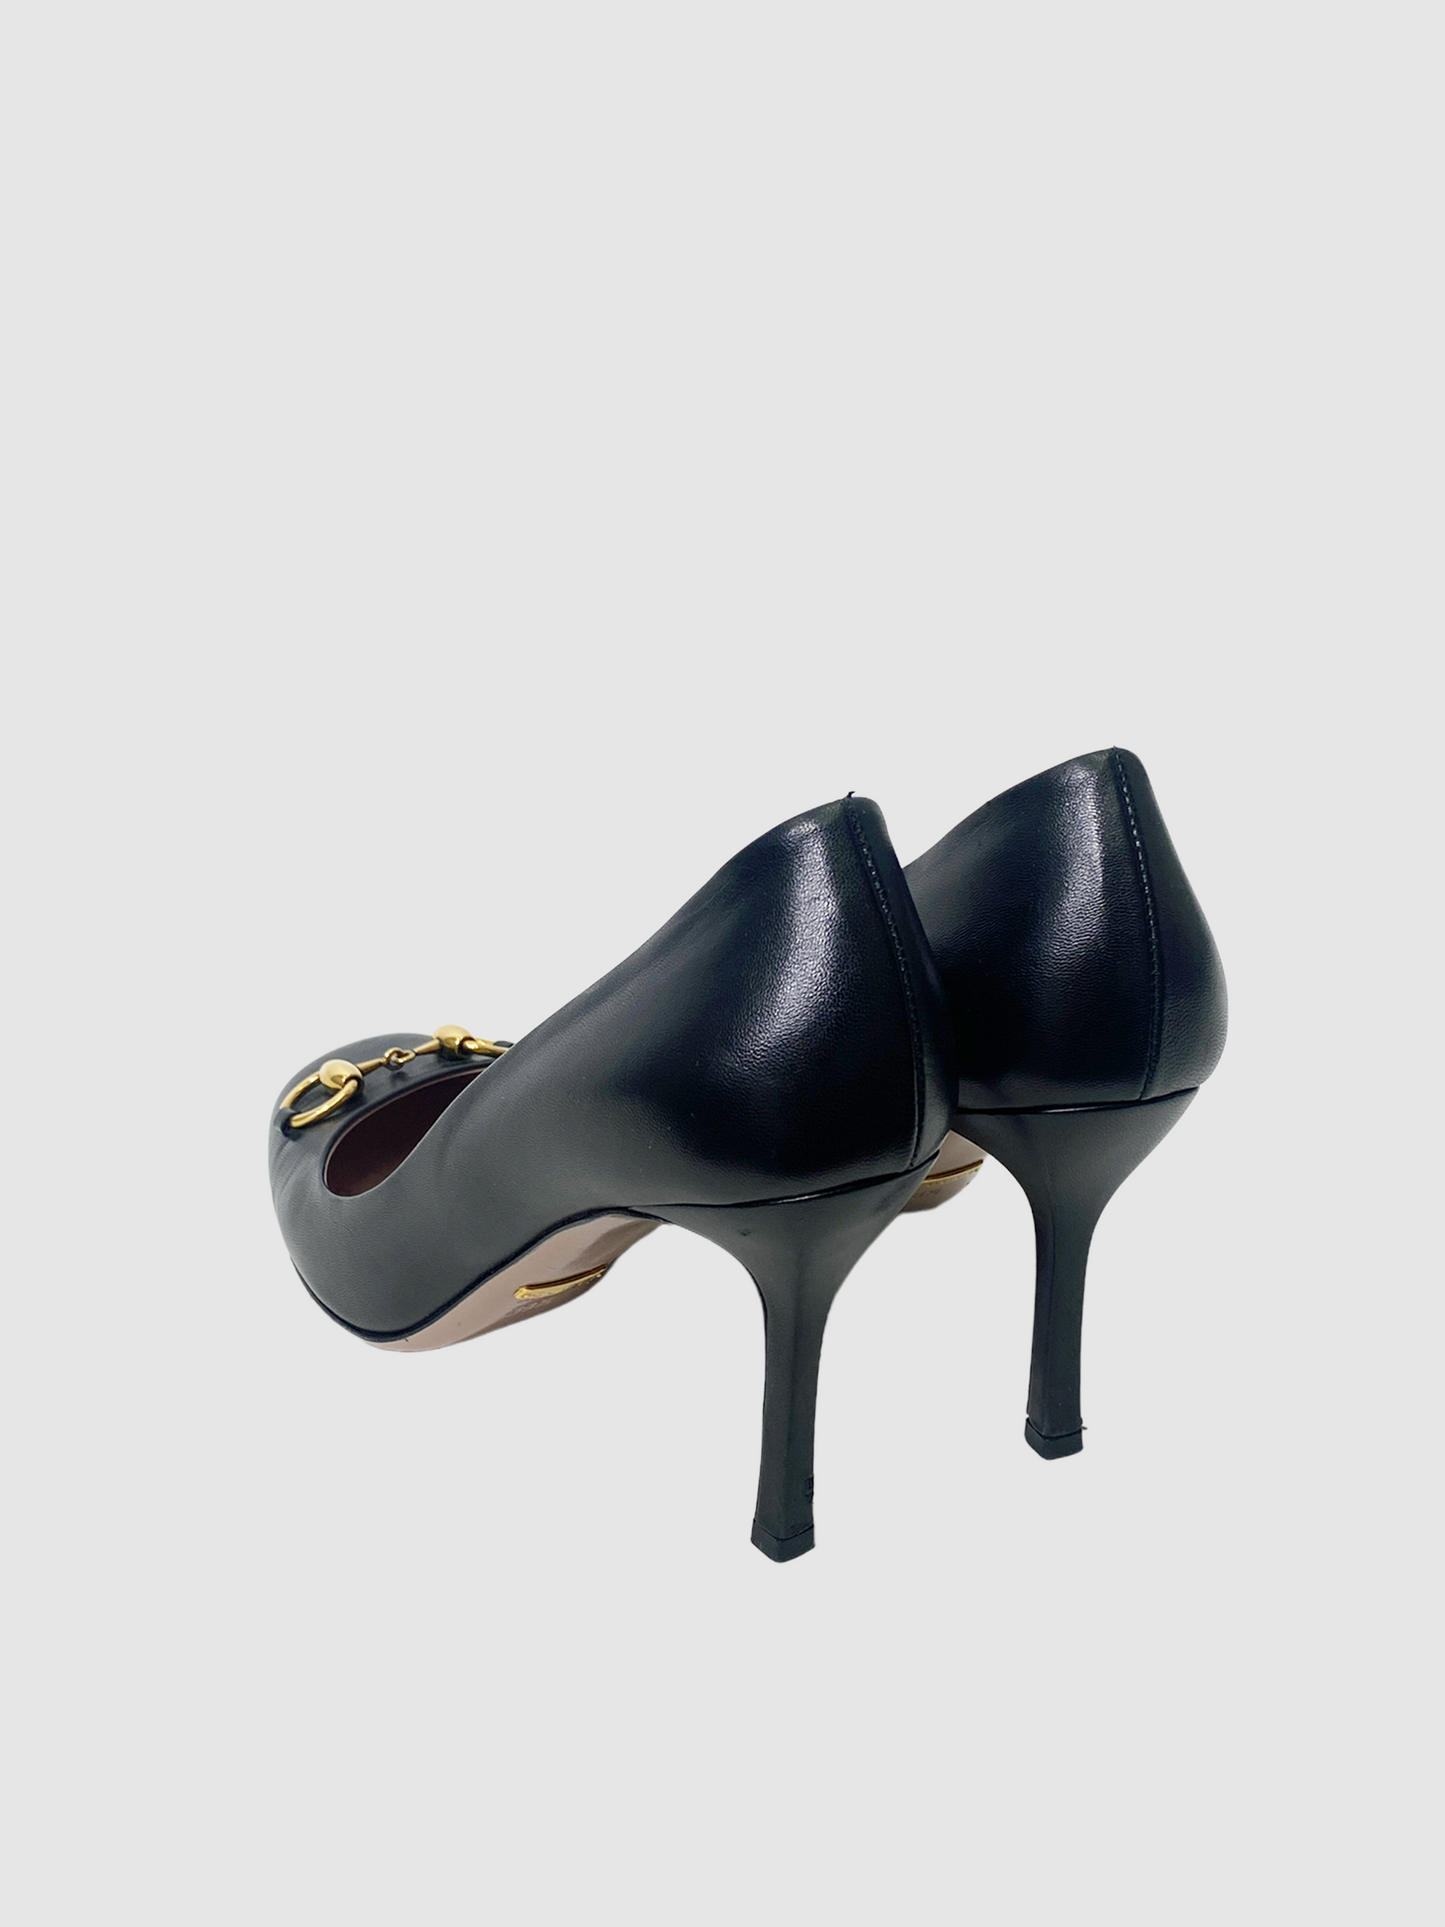 Gucci Square Toe Black Horsebit Heel - Size 38.5